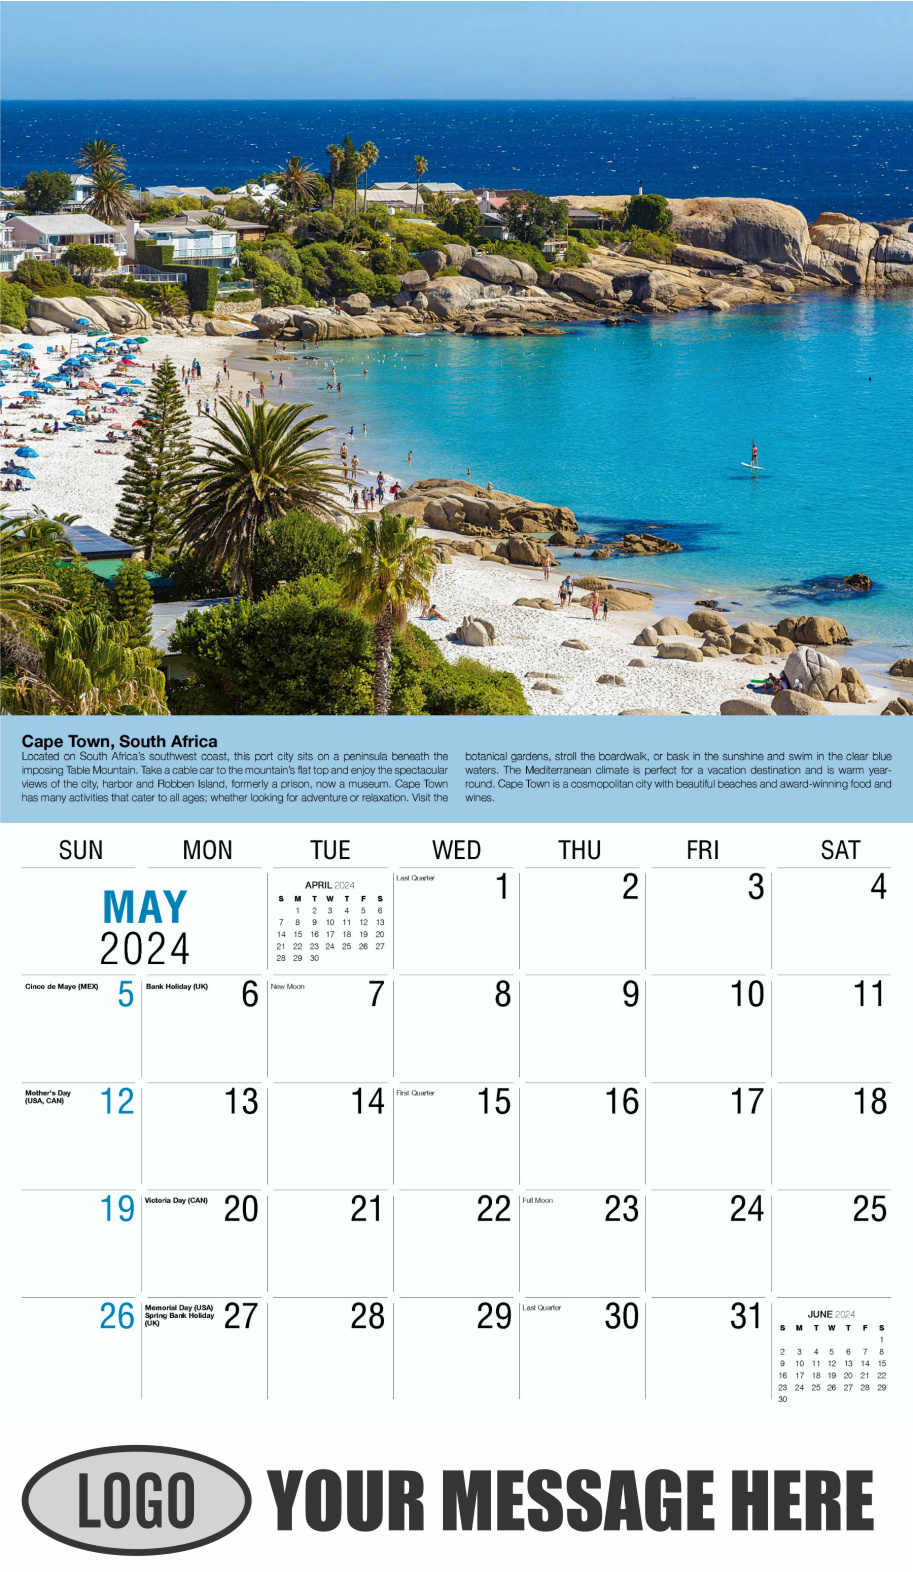 World Travel 2024 Business Advertising Wall Calendar - May